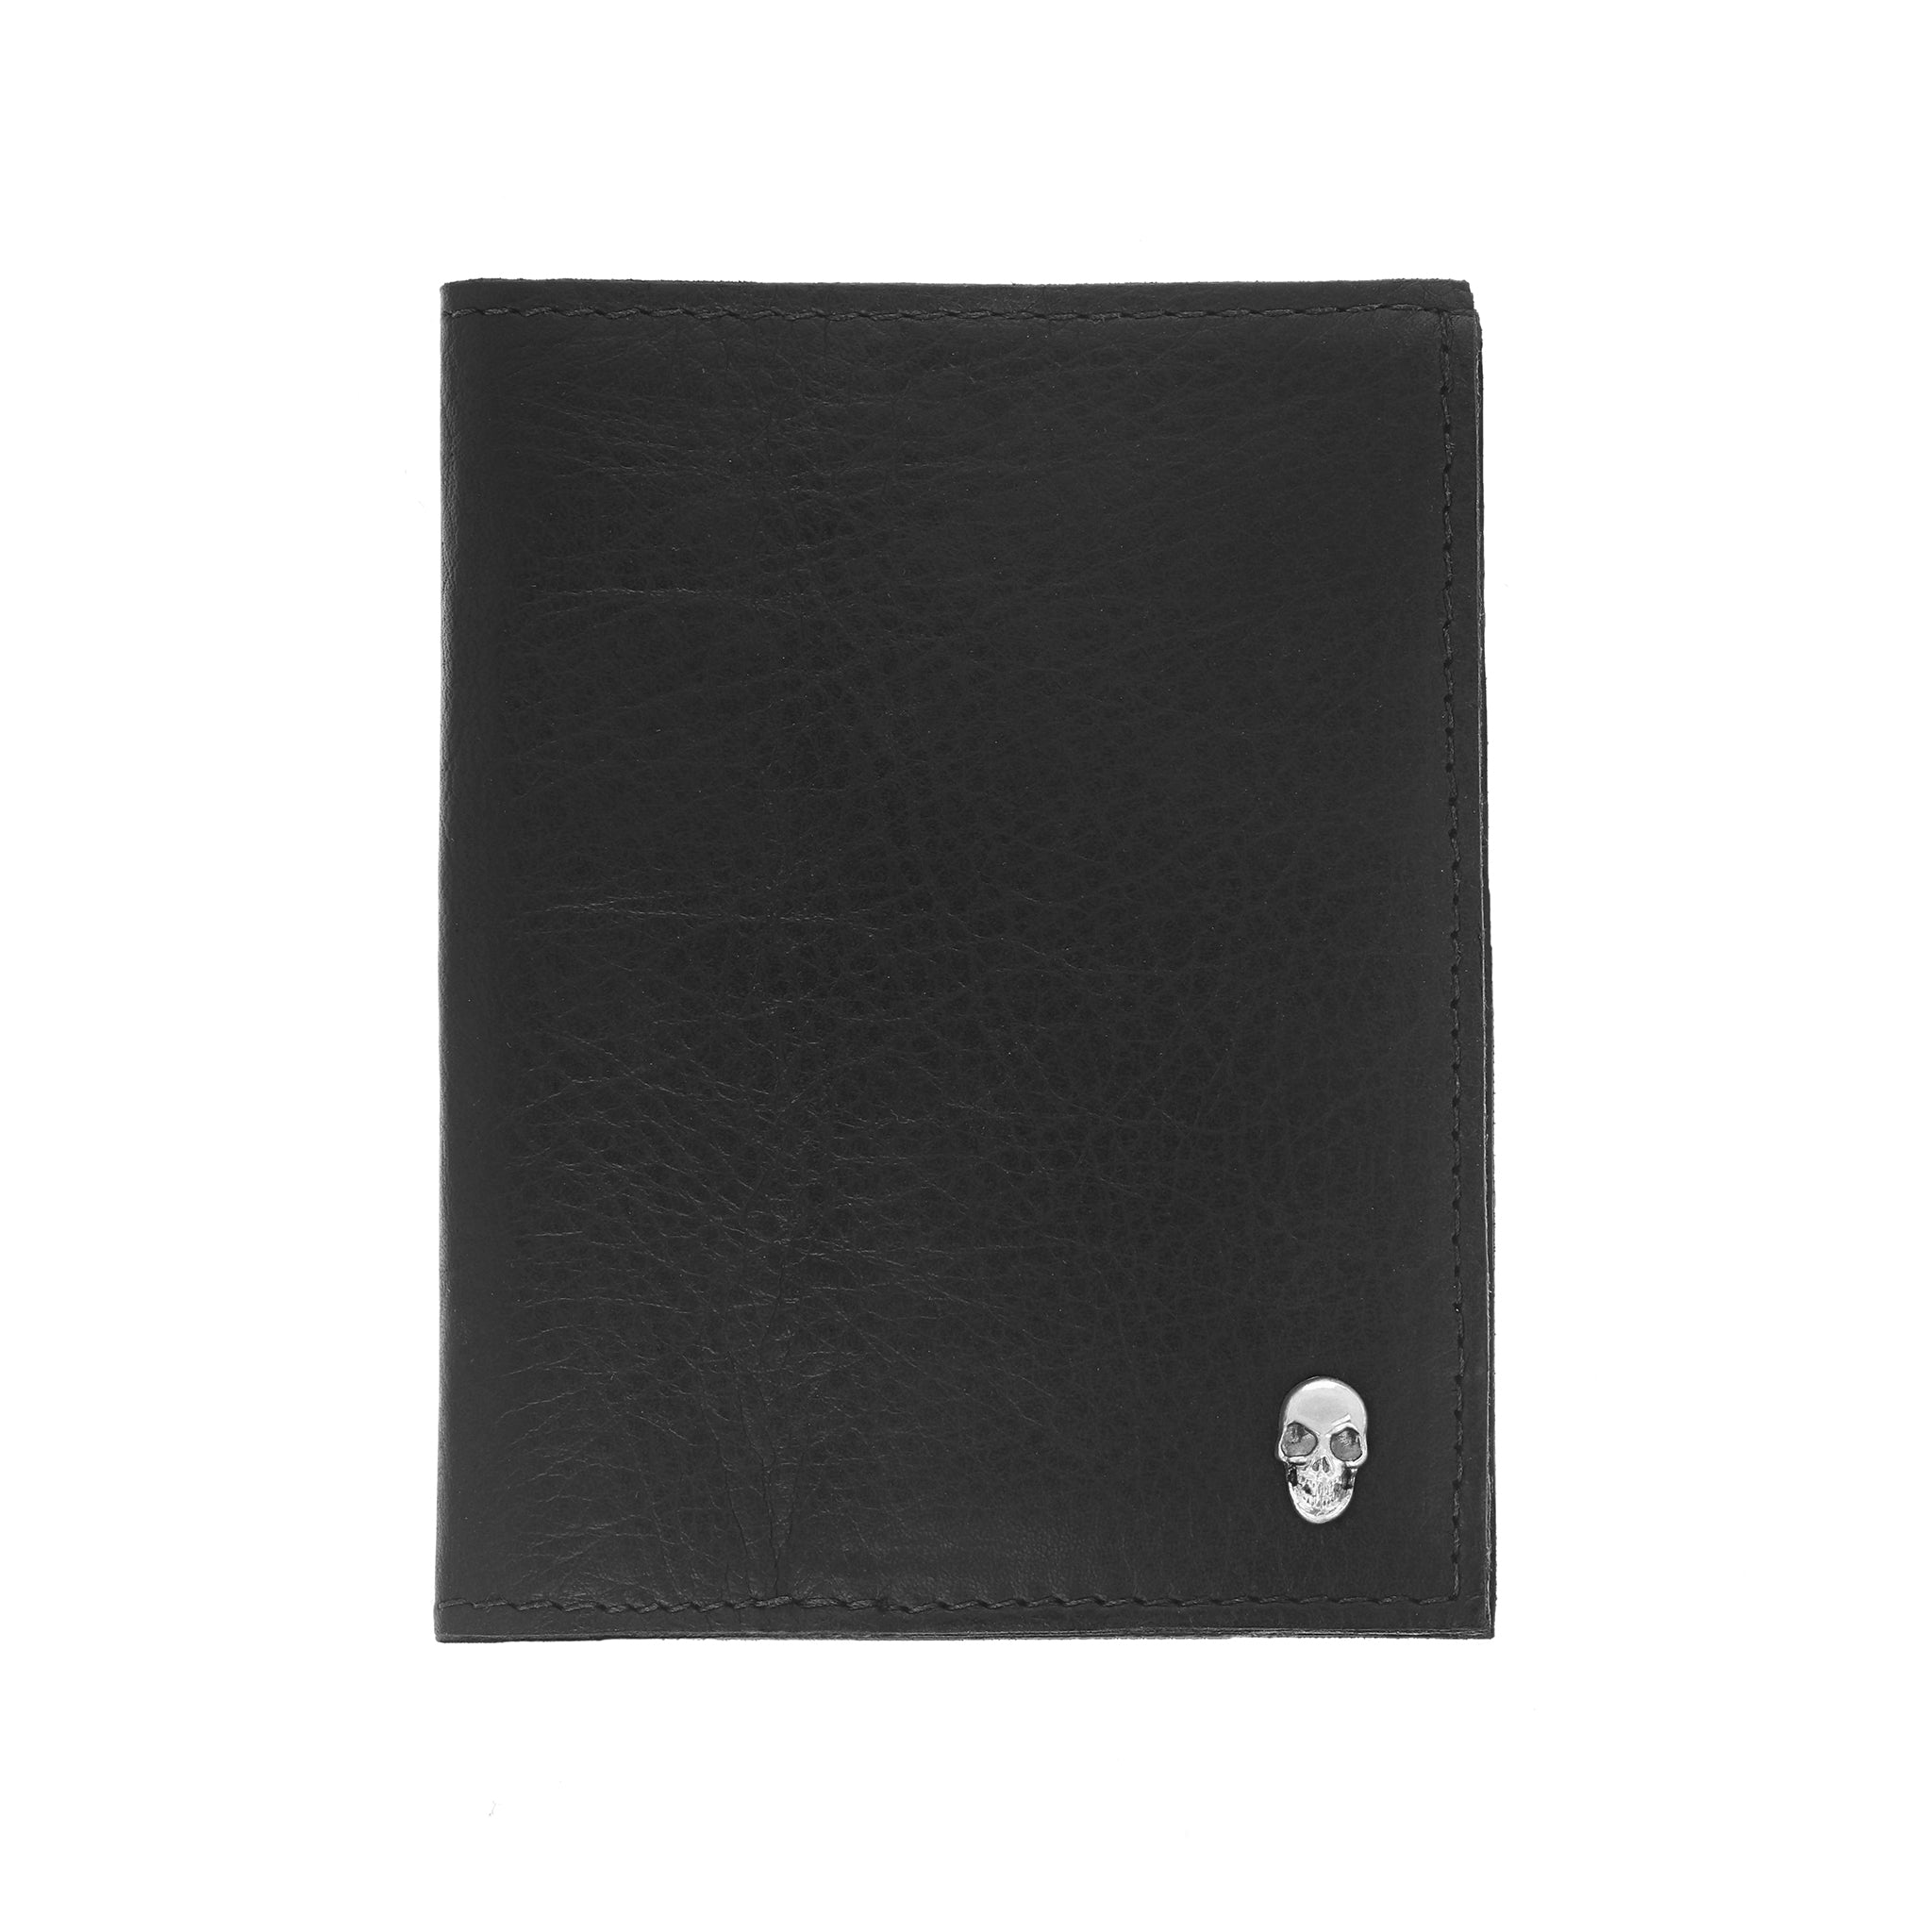 Passport Wallet w/ Silver Skull